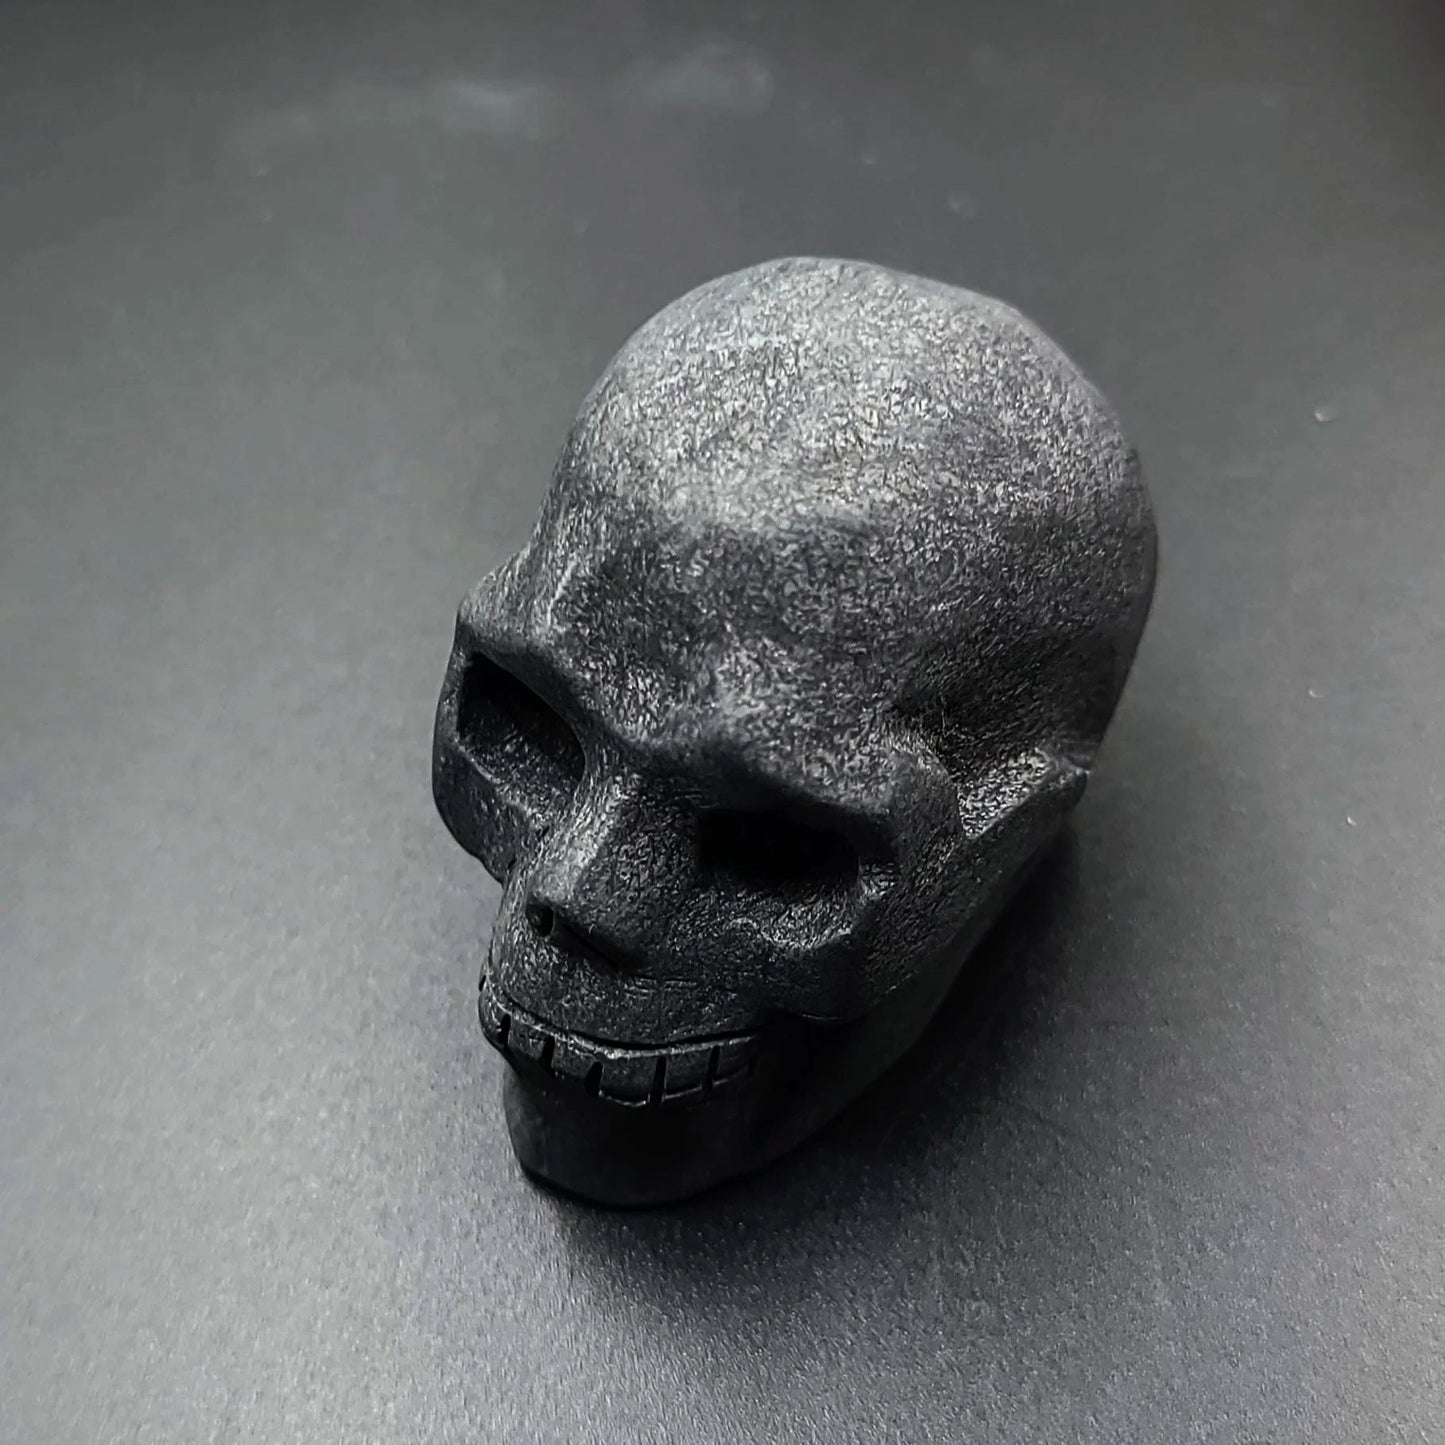 Shungite Skull Stone "Small"